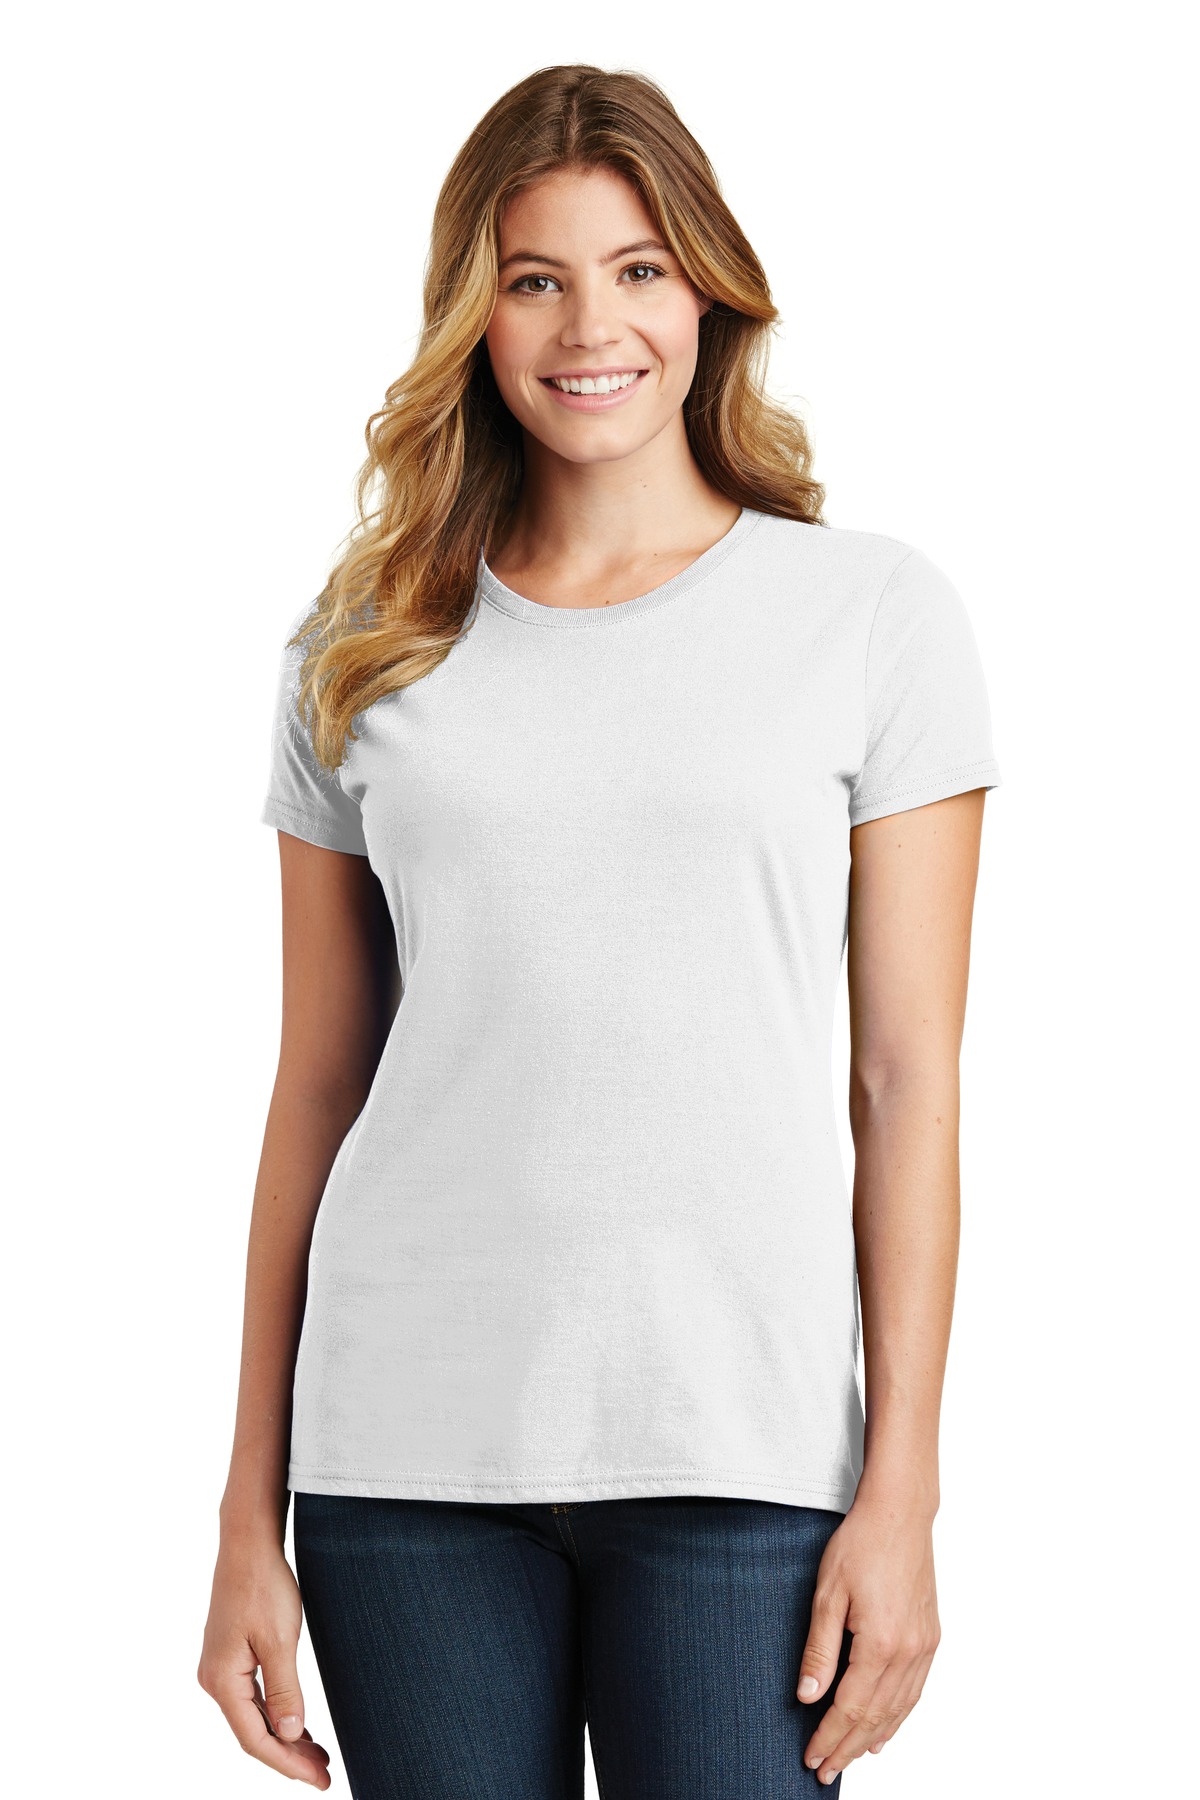 Port & Company Ladies Hospitality T-Shirts ® Ladies Fan Favorite Tee.-Port & Company